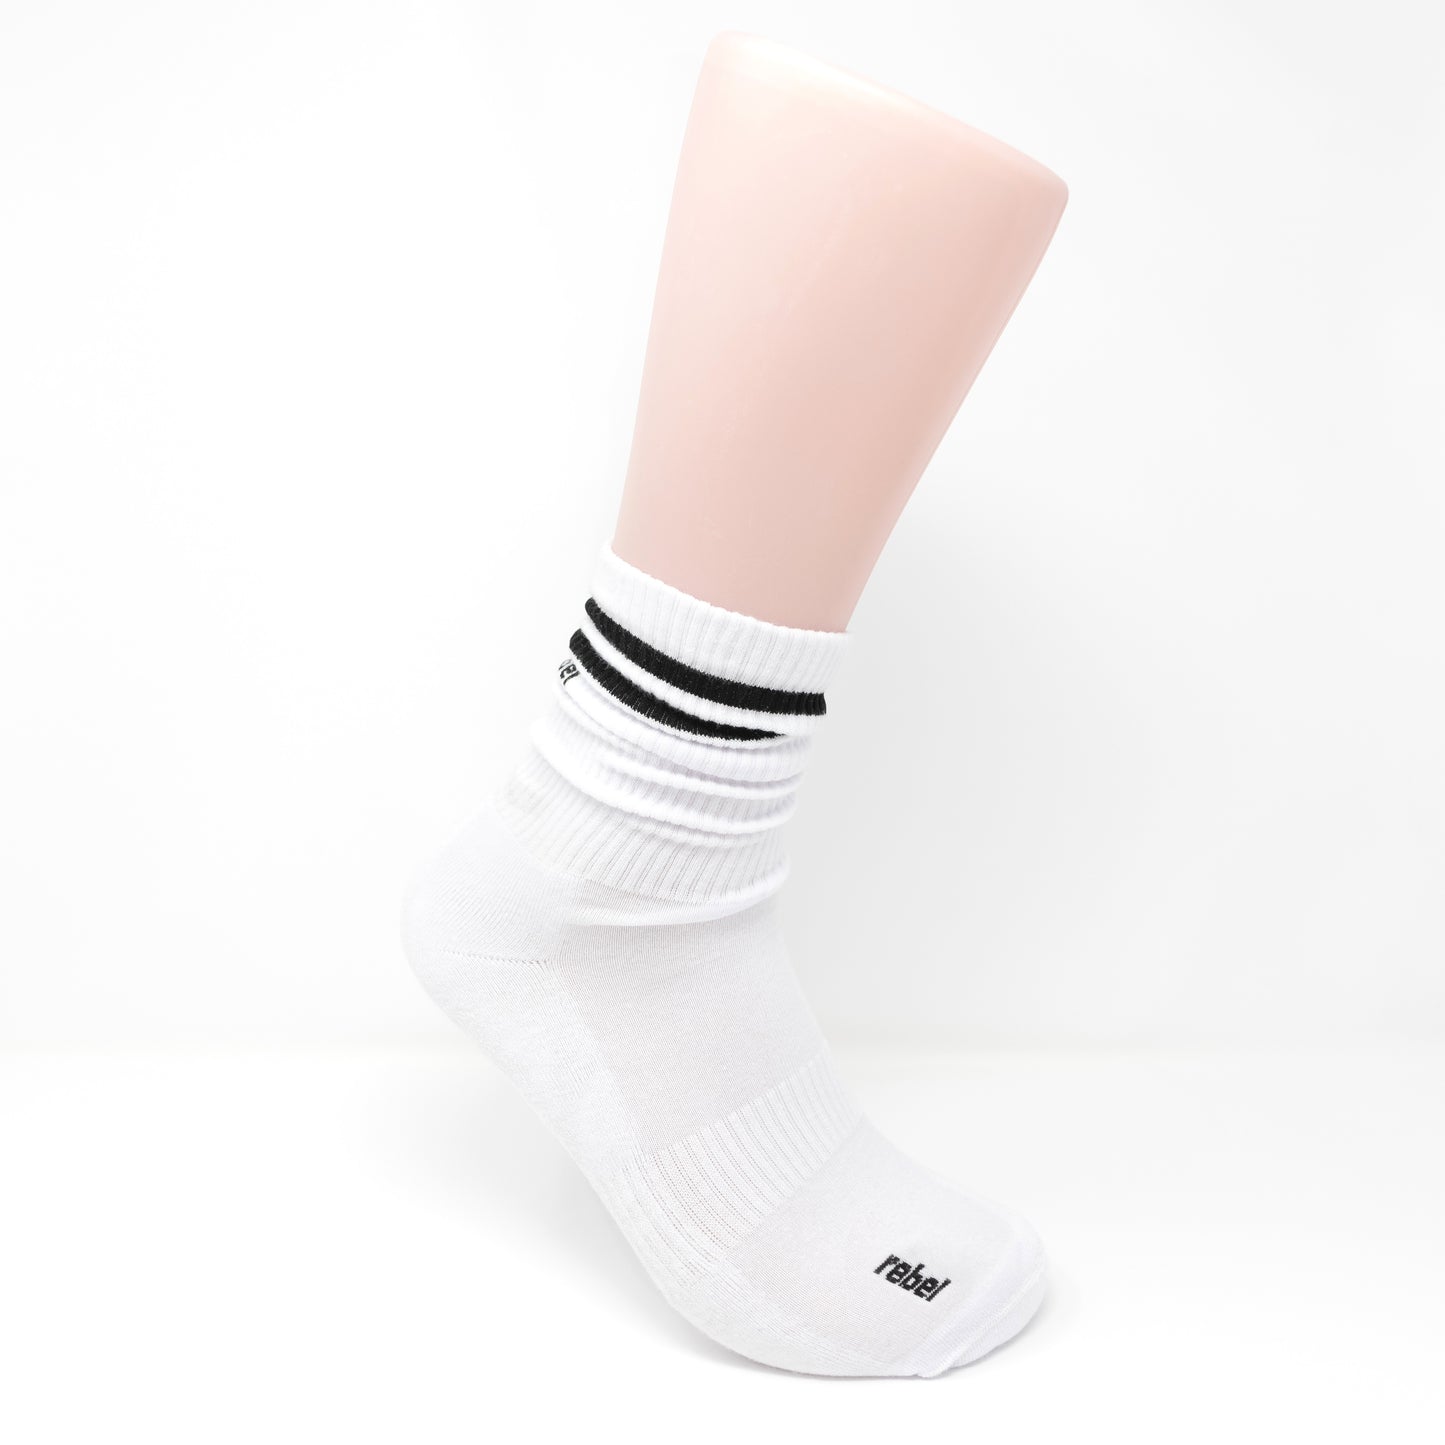 Slouchy White Socks